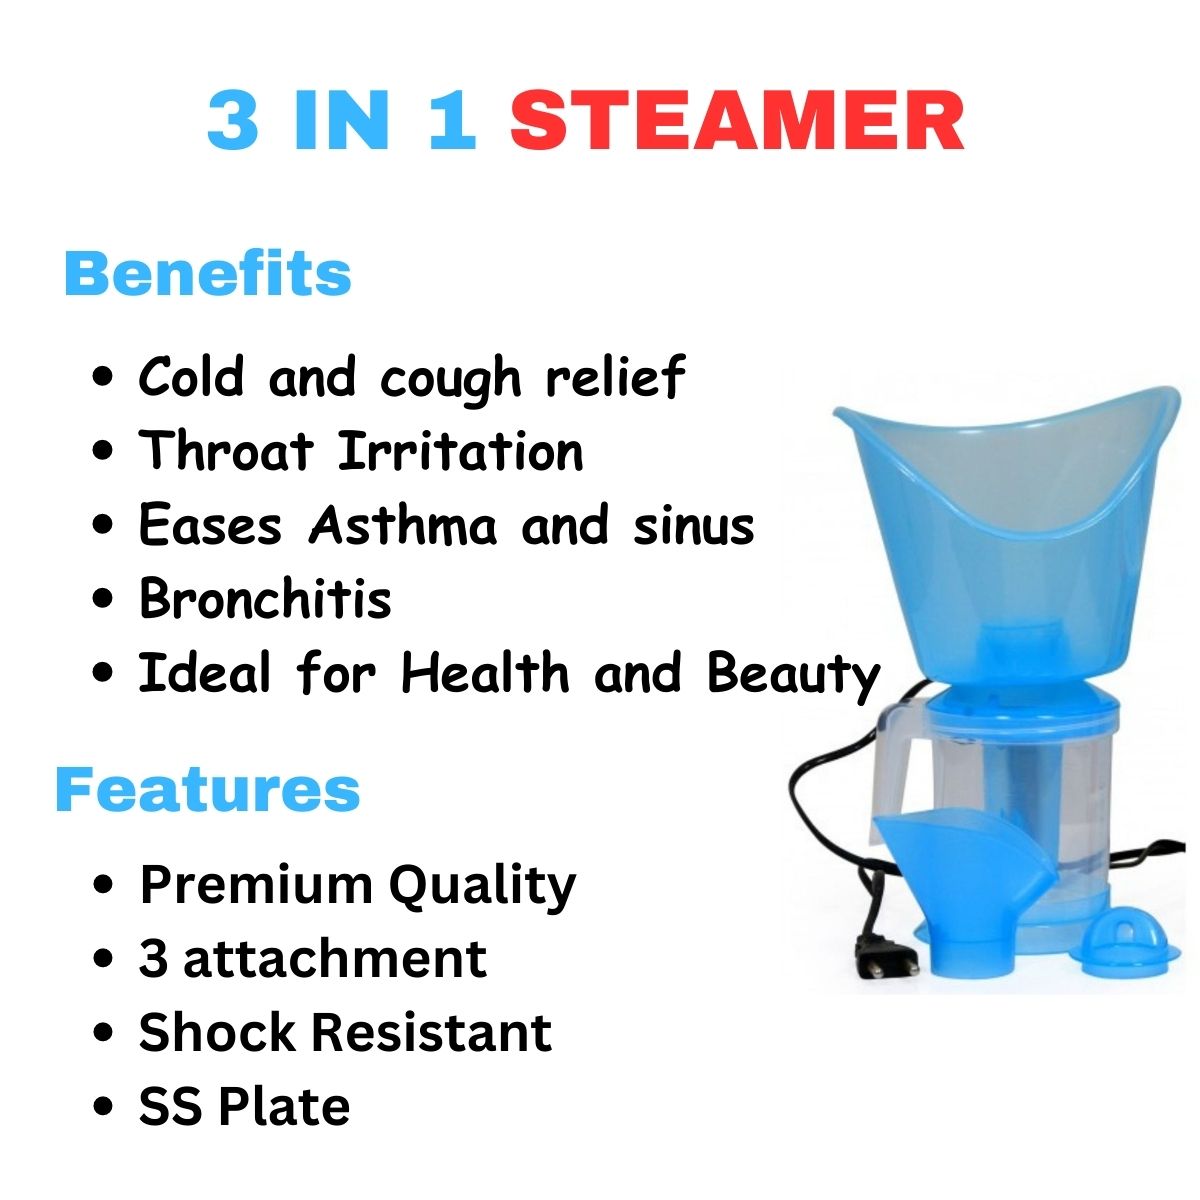 3 IN 1 Steamer